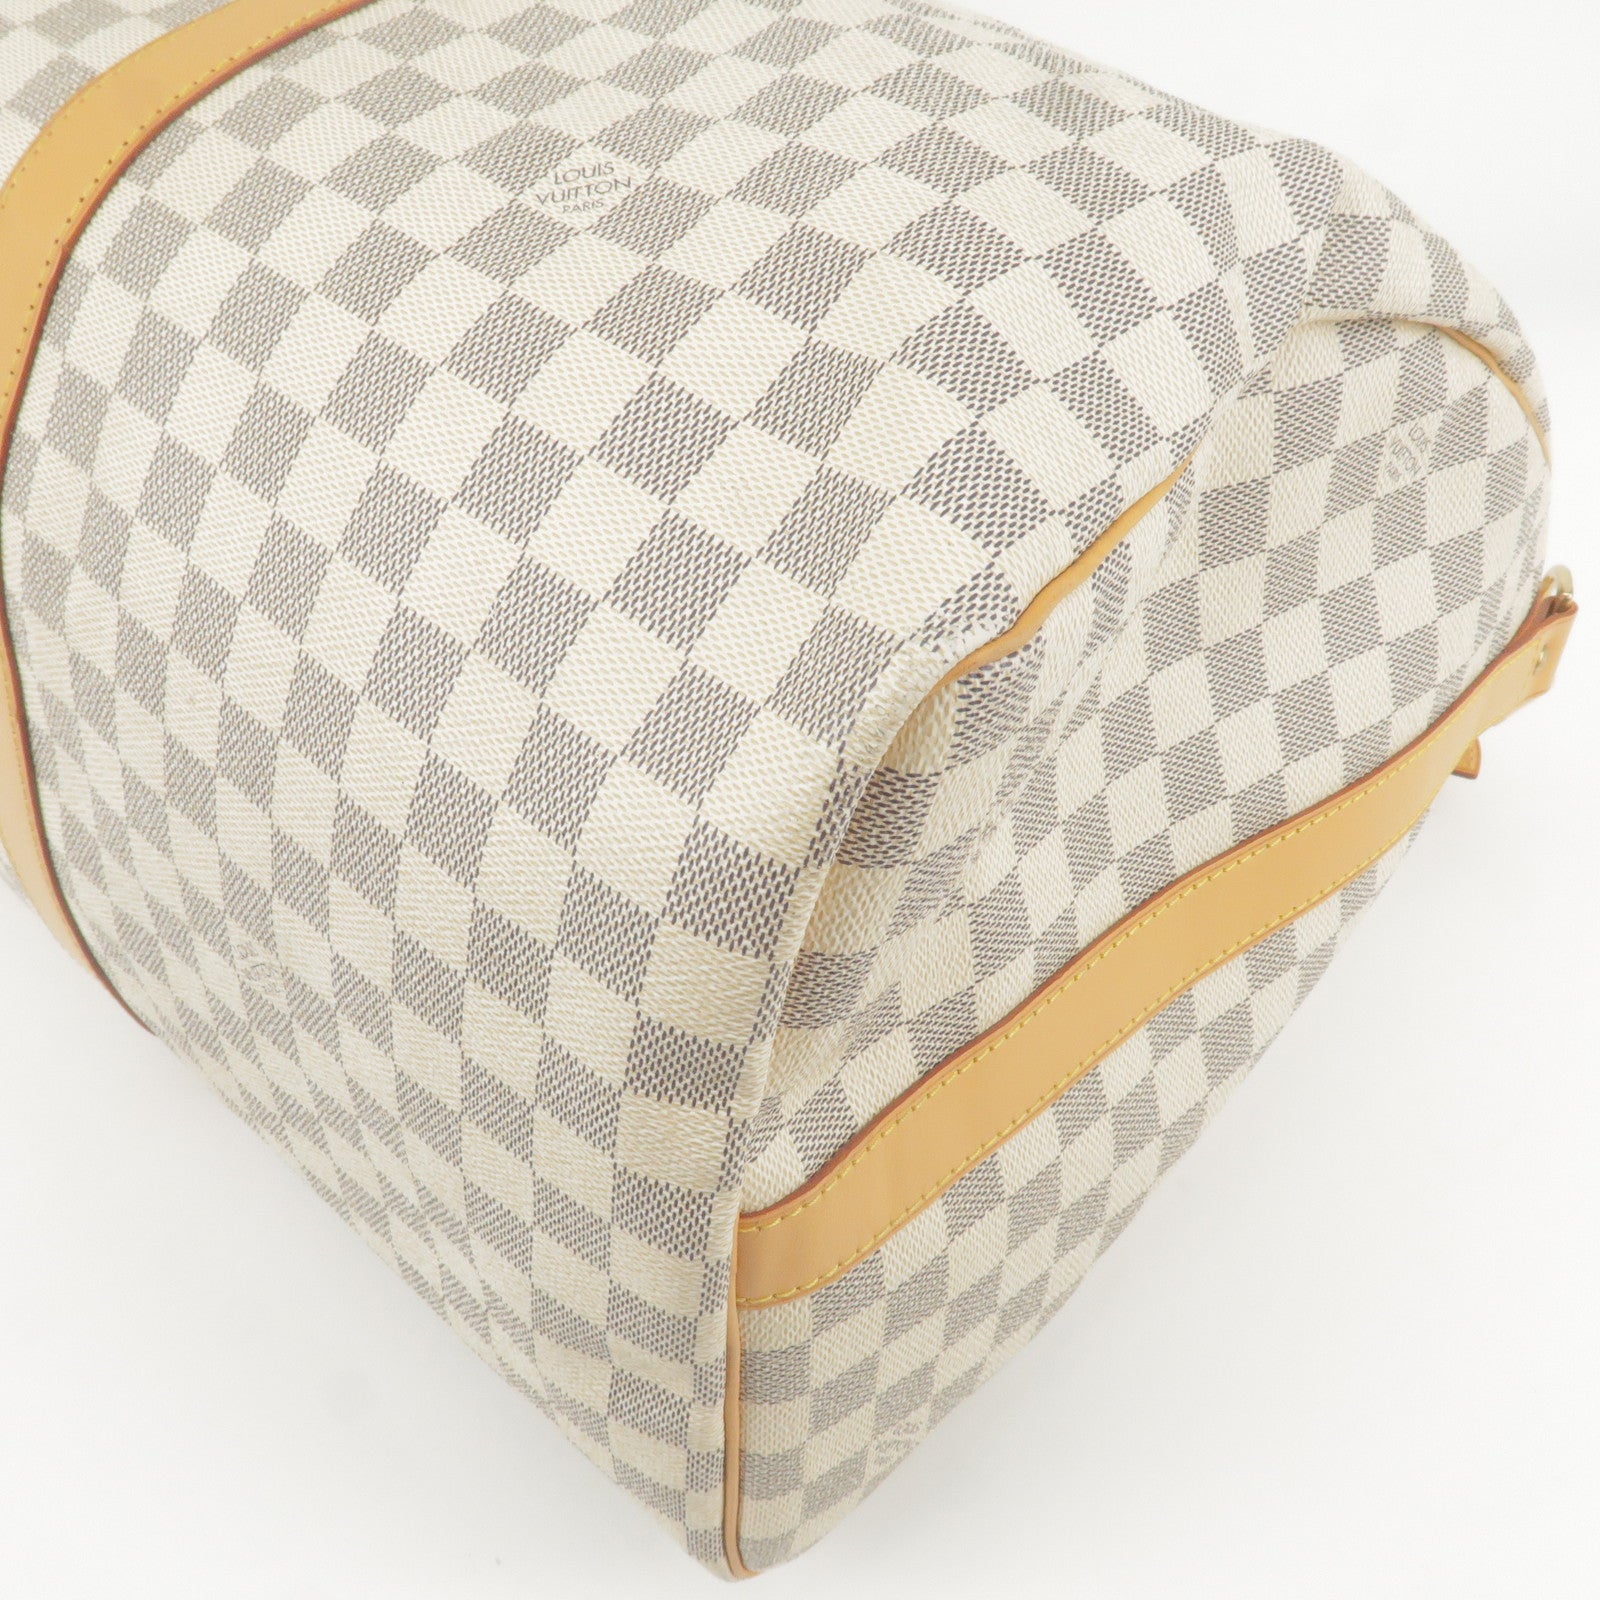 Louis Vuitton Keepall 55 Bandouliere Damier Azur Bag